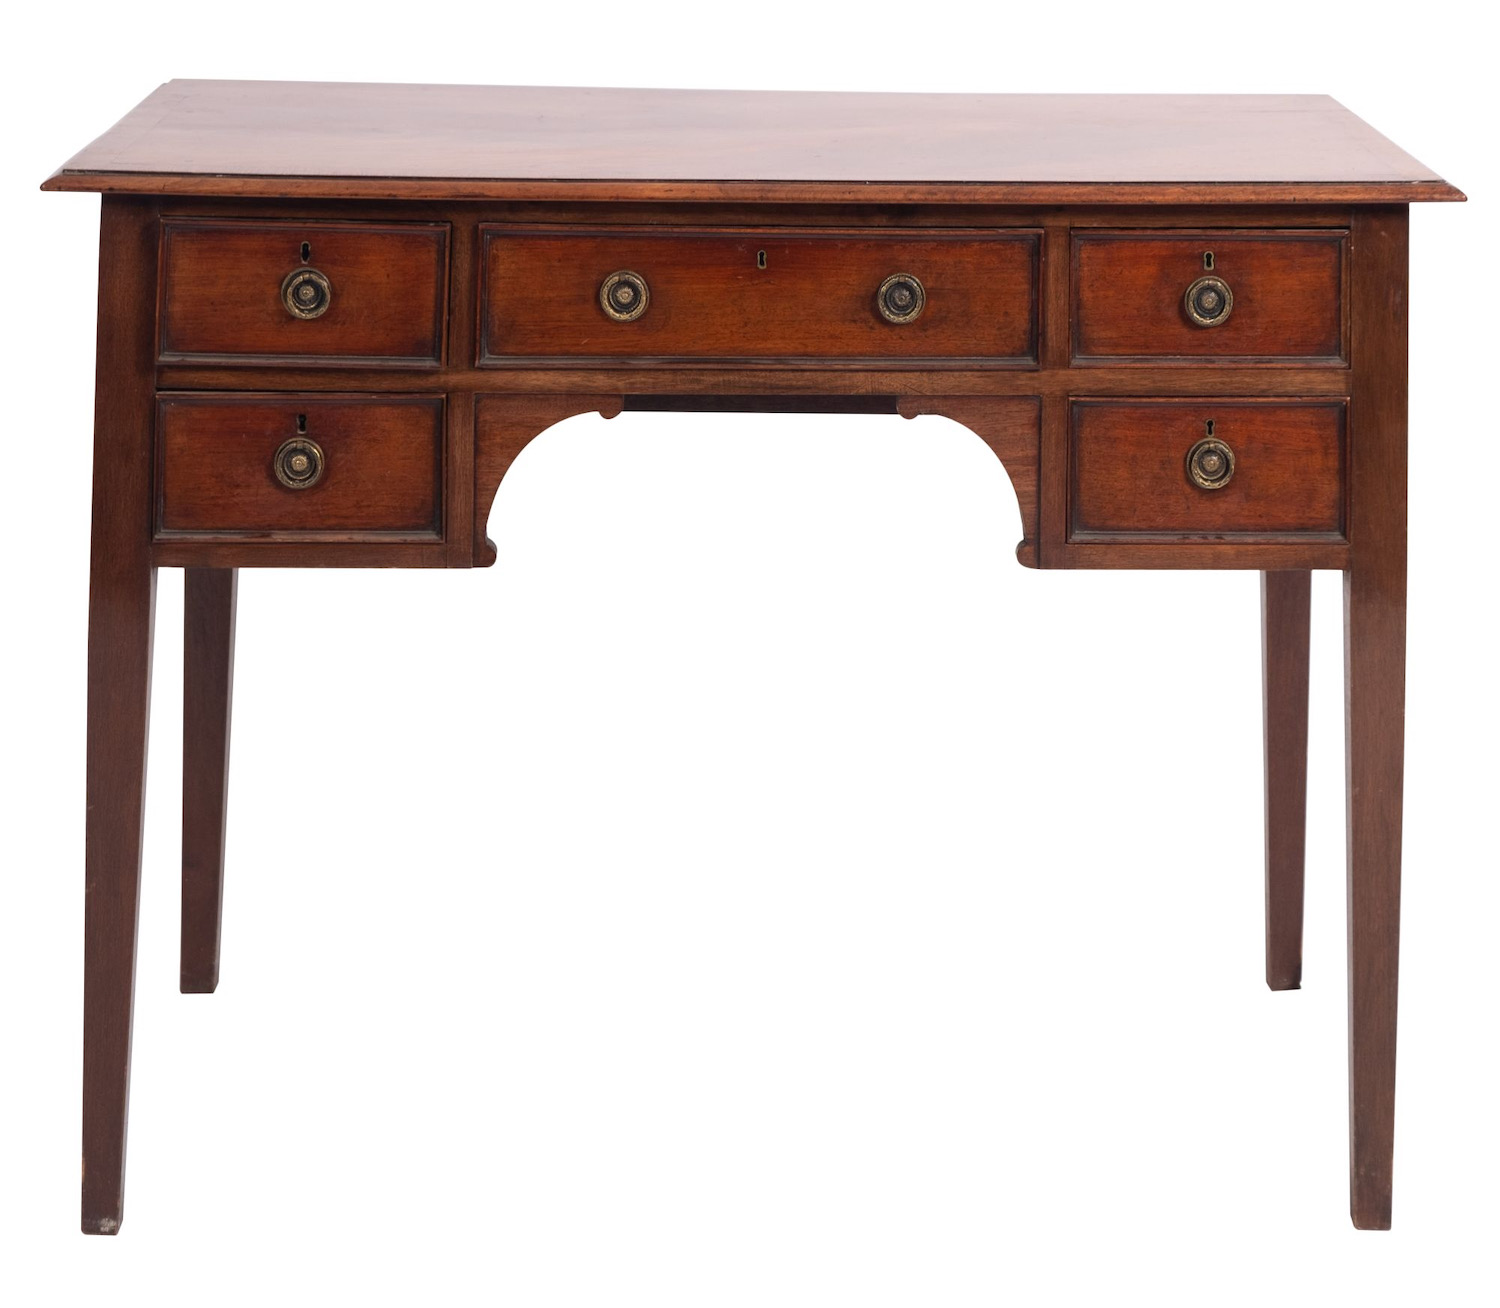 A mahogany and crossbanded writing table